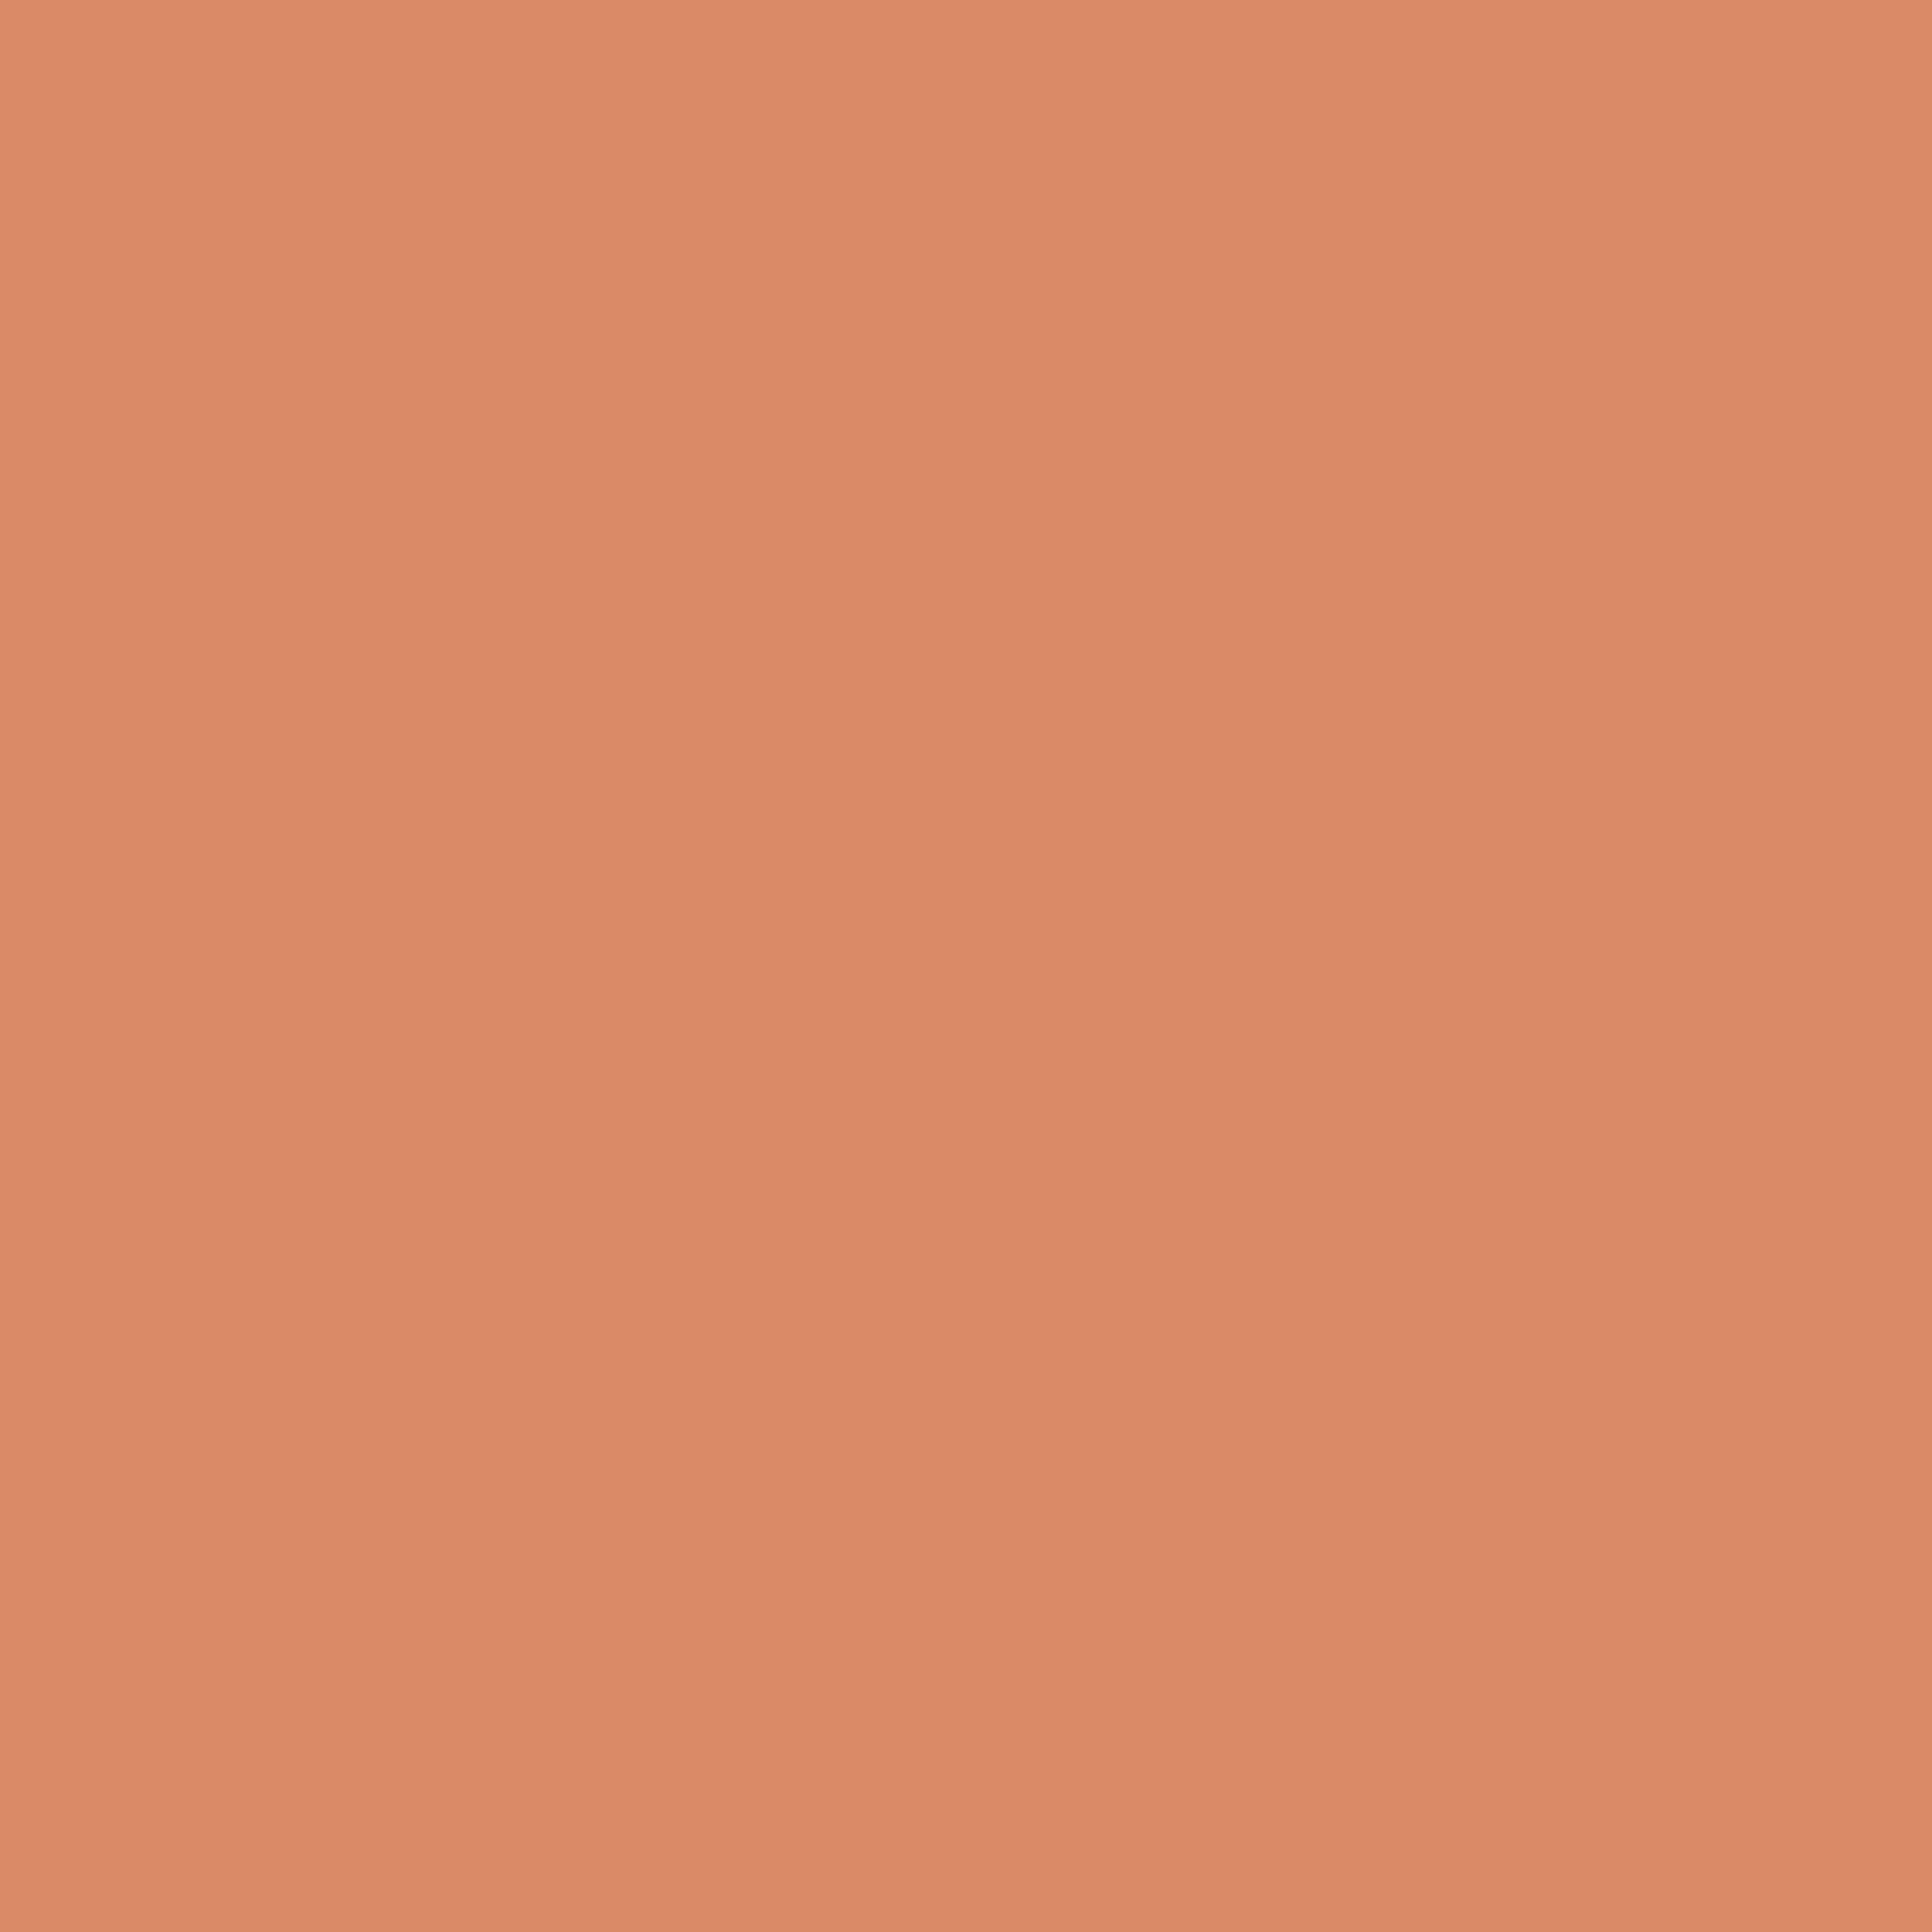 2732x2732 Copper Crayola Solid Color Background